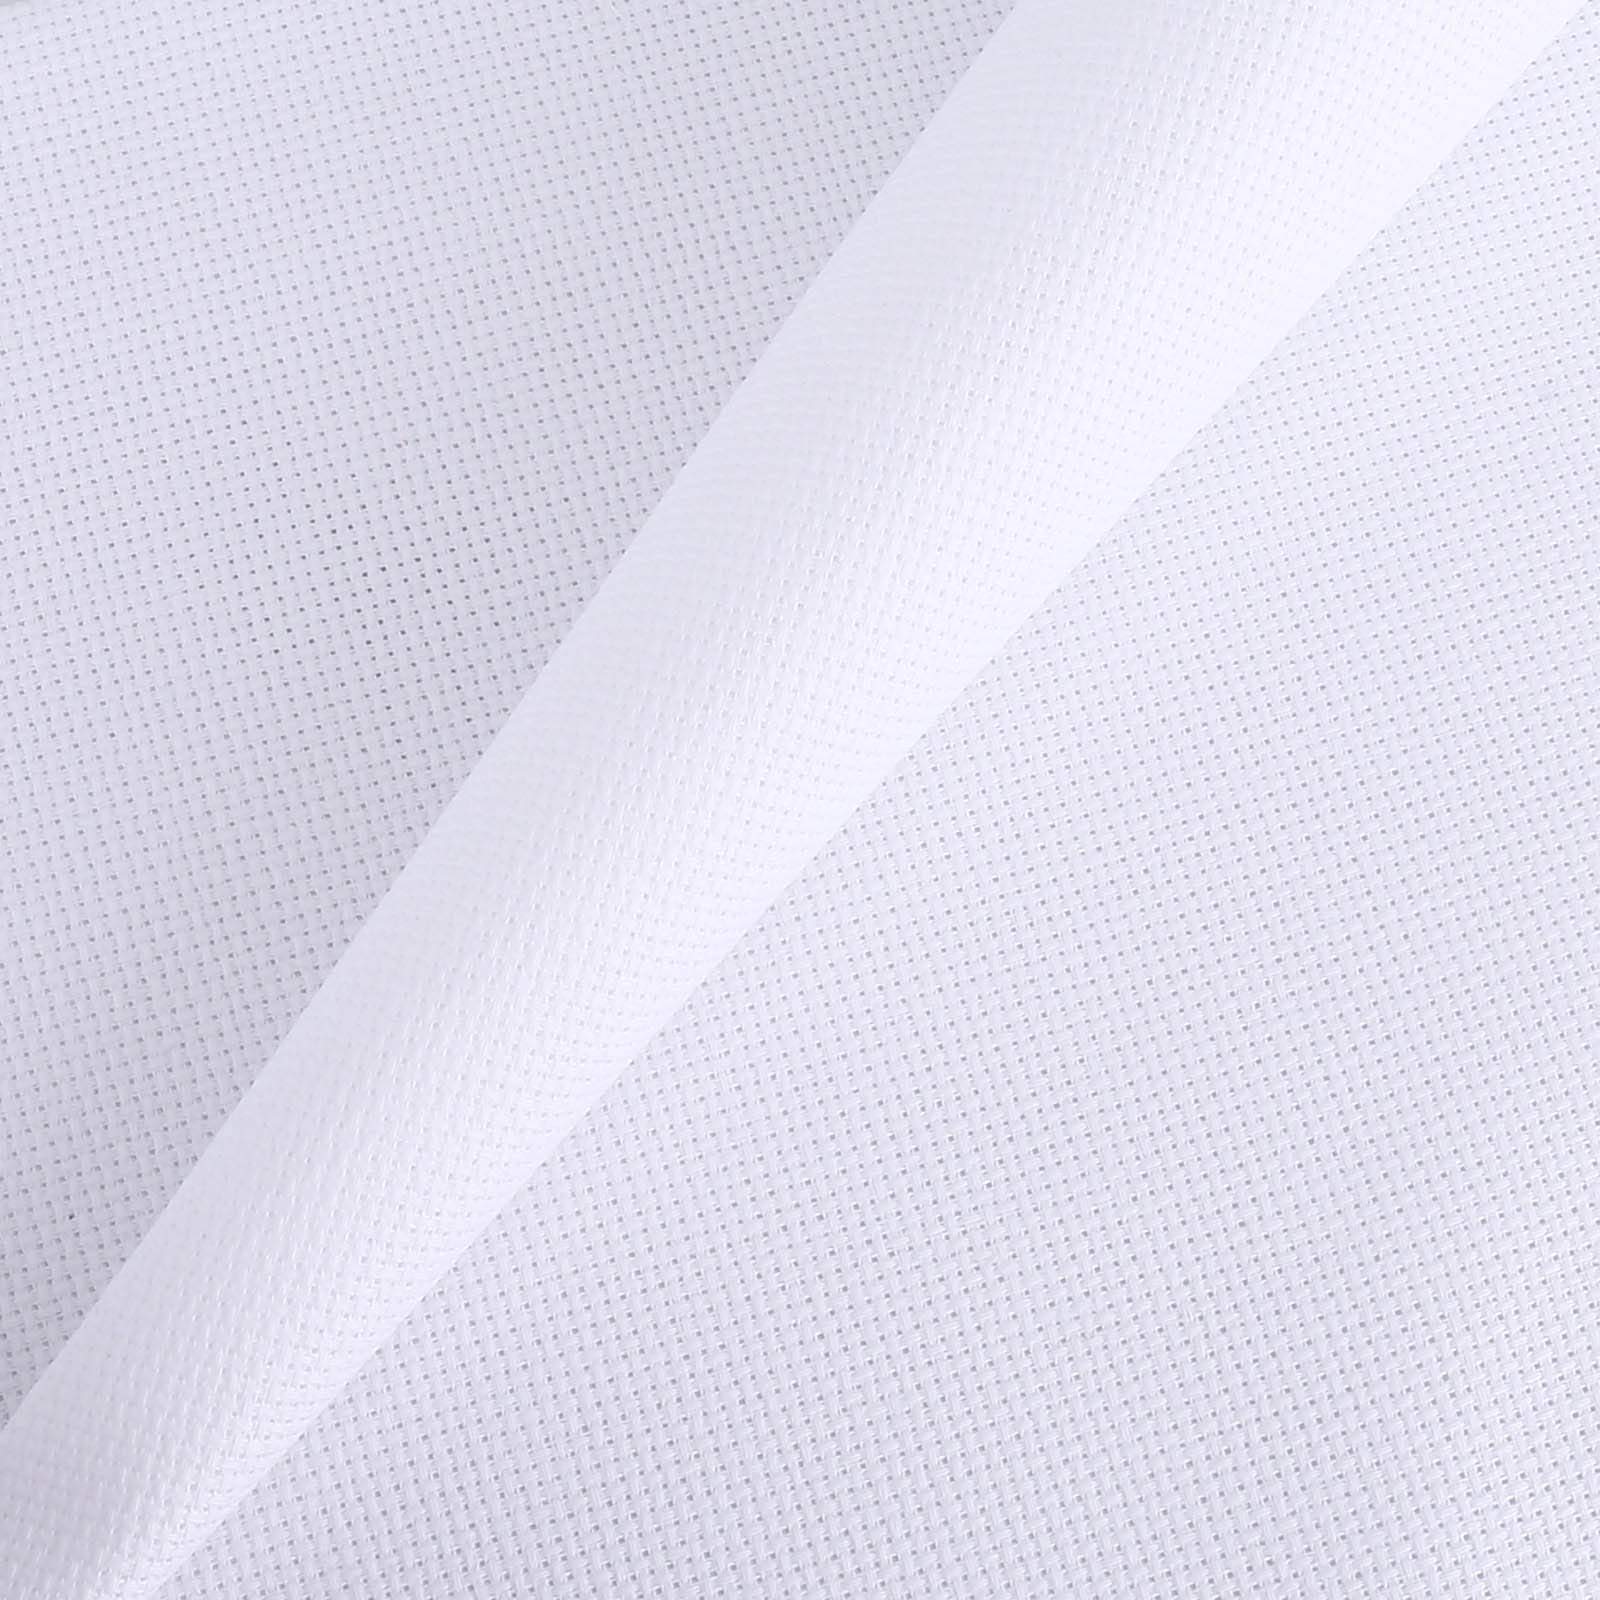 Aida Cloth 11ct White - 15in x 18in tube